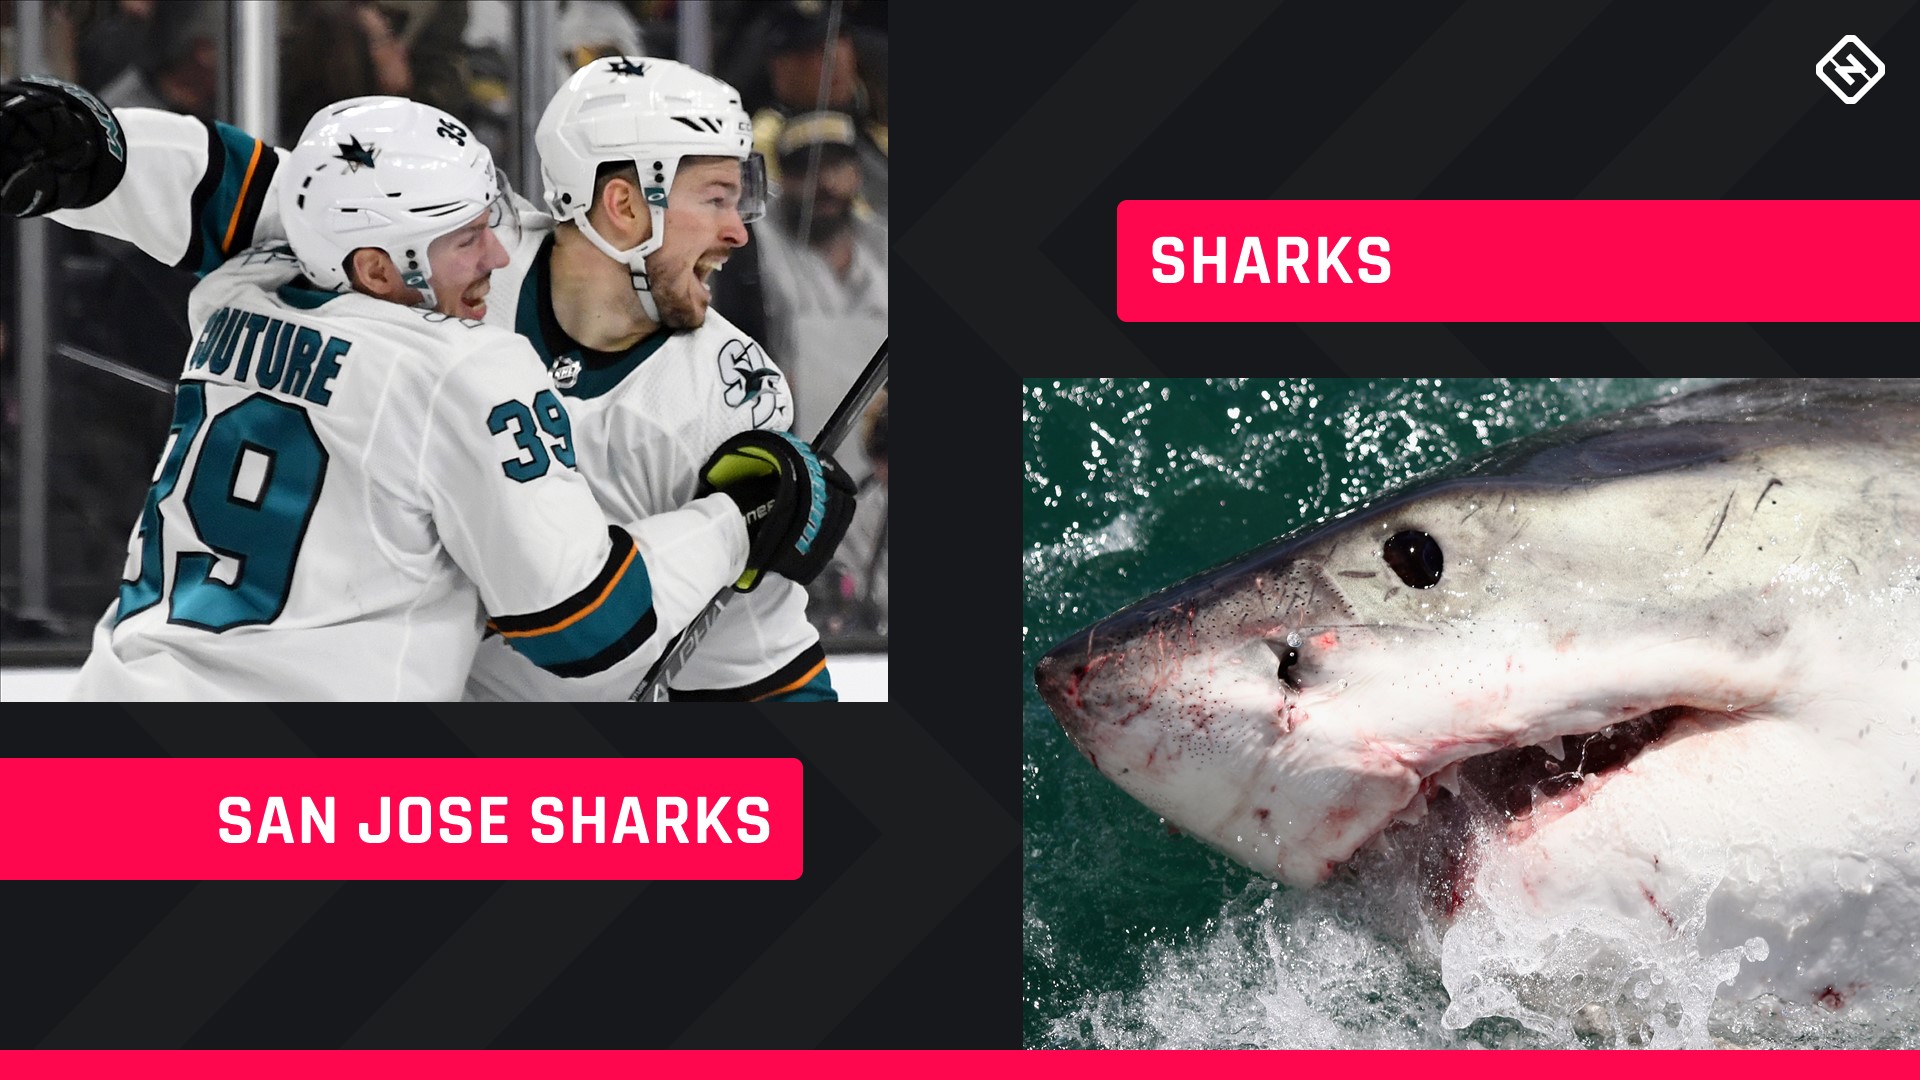 San Jose Sharks Sharks 072719 3vn31bk7fnju1x097syv3l2rs ?t=934598428&w={width}&quality=80